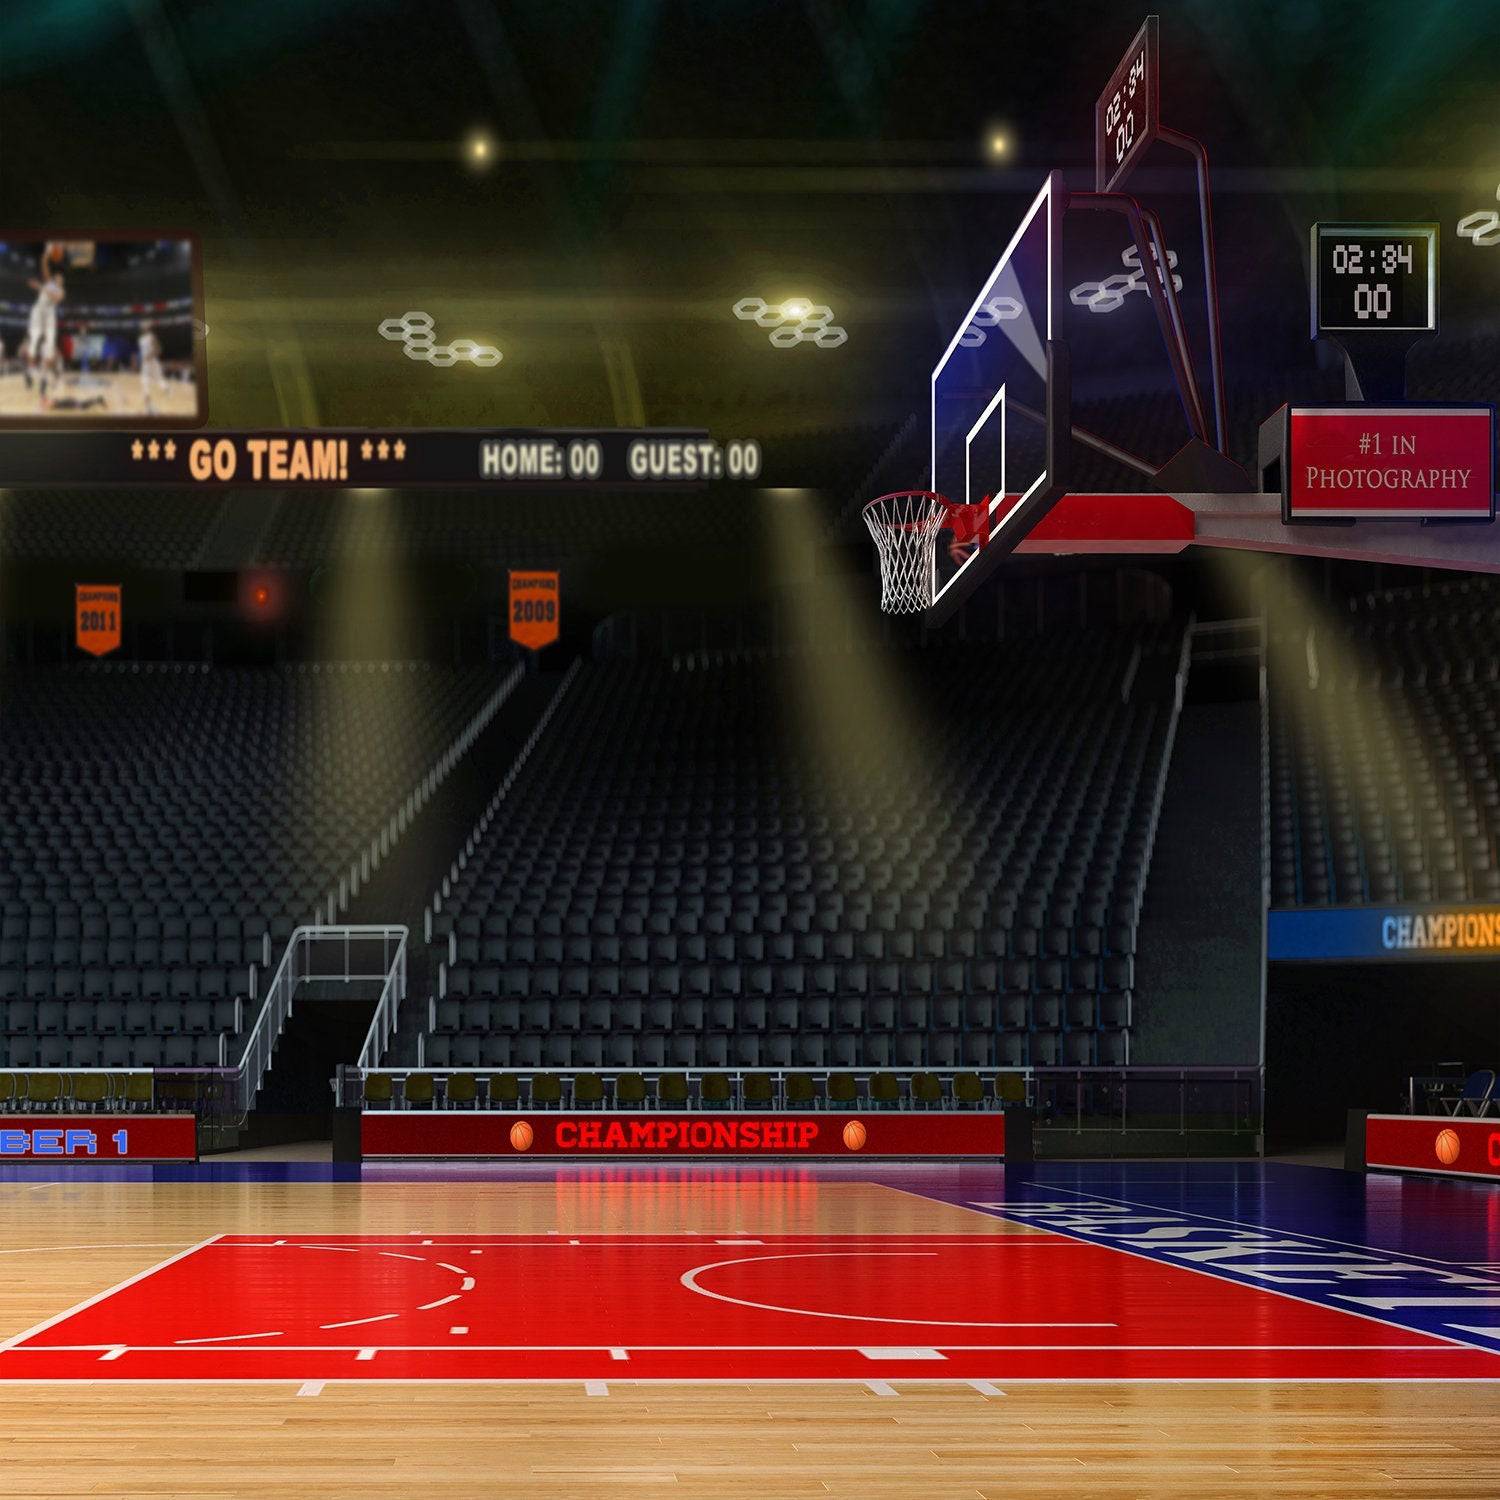 NBA Basketball Court Backdrop - Pro 10  x 8  